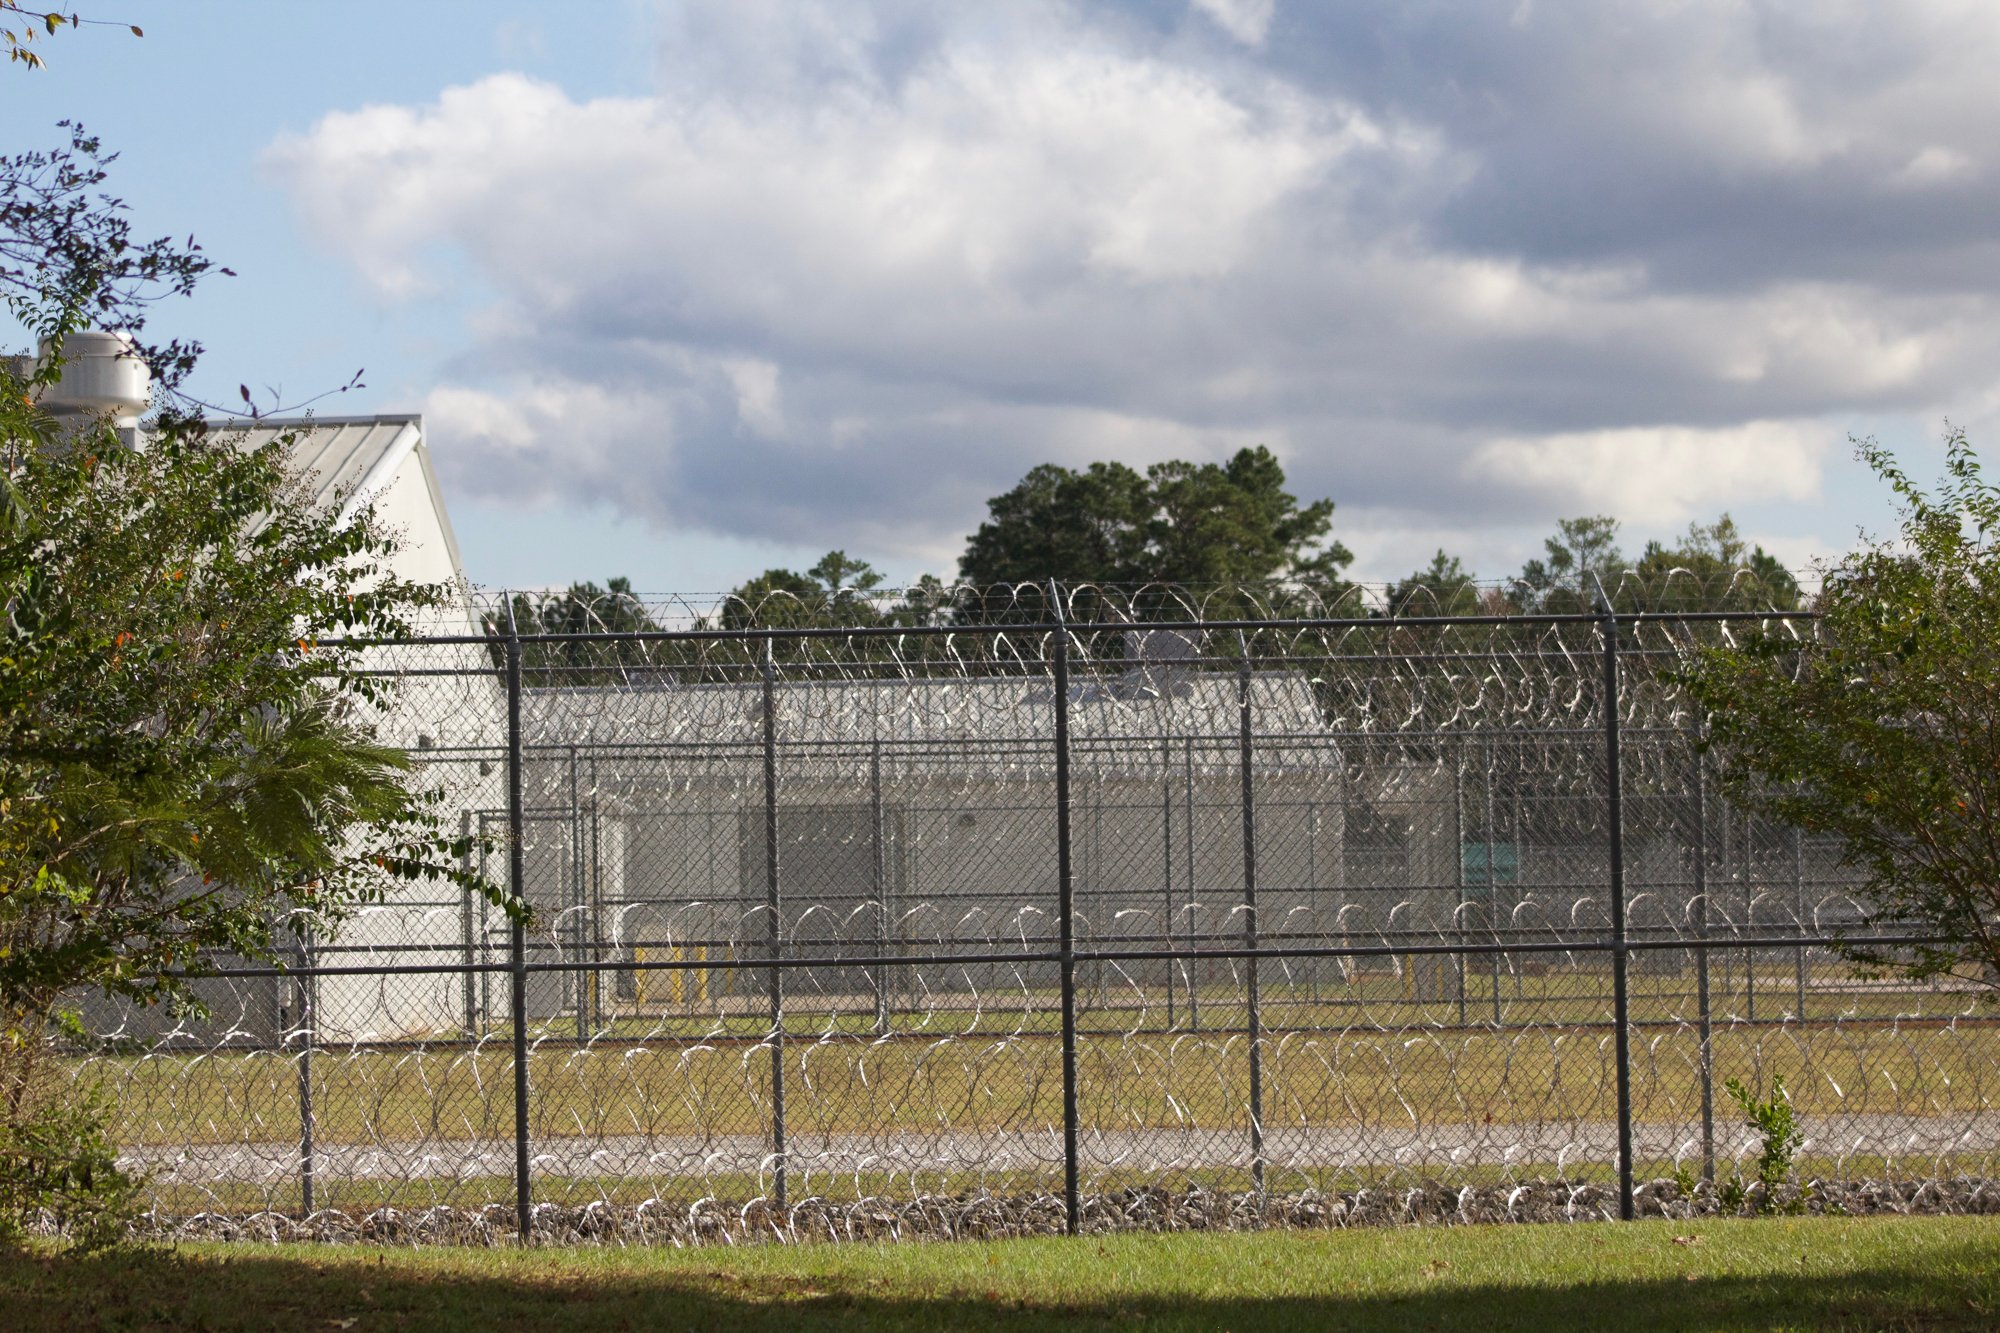 Joe Corley Detention Facility